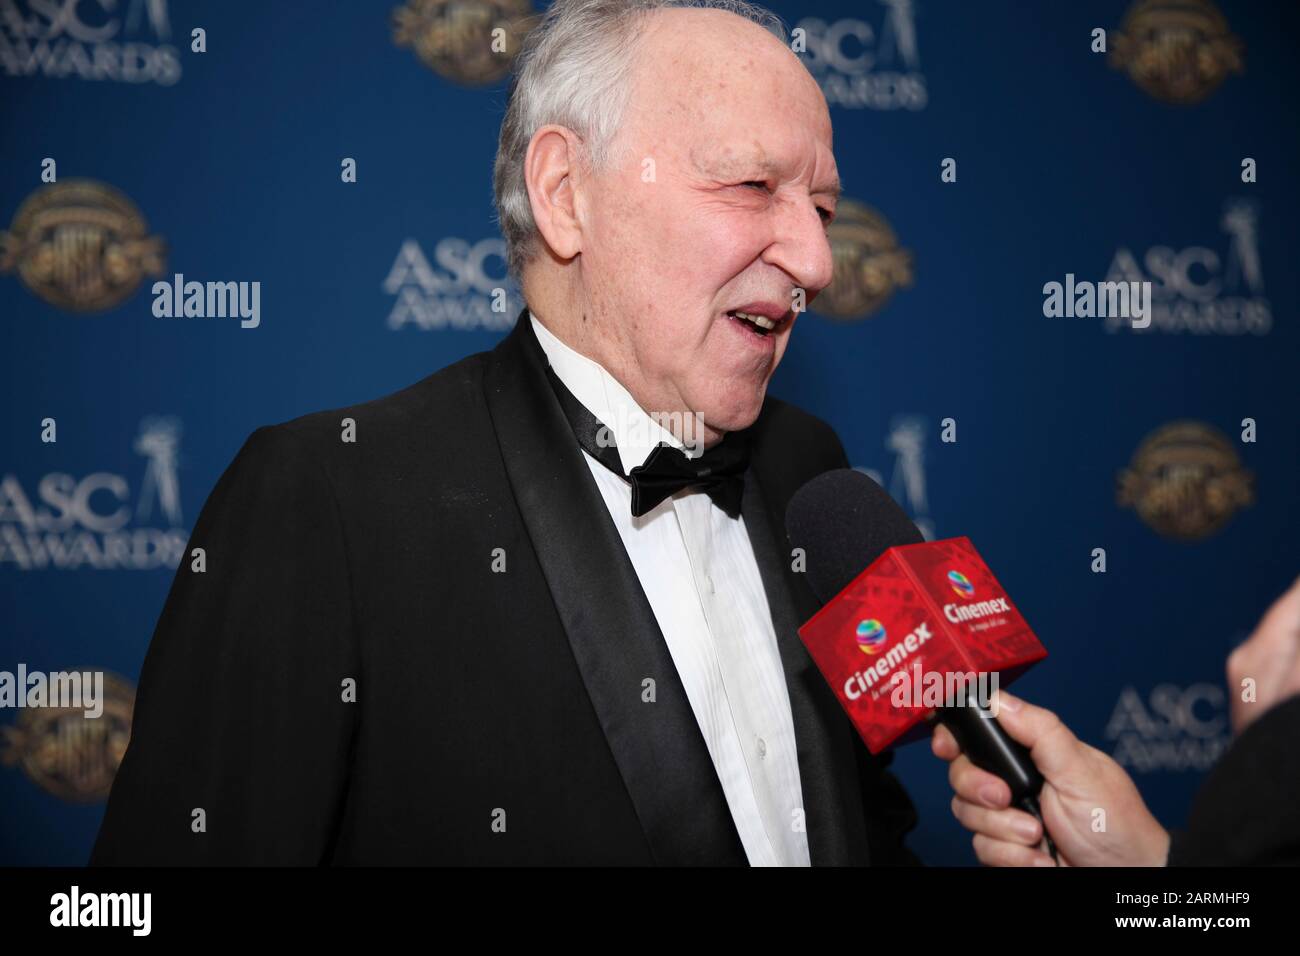 Werner Herzog partecipa alla 34th Annual American Society of Cinematographers ASC Awards alla Ray Dolby Ballroom di Los Angeles, California, USA, il 25 gennaio 2020. Foto Stock